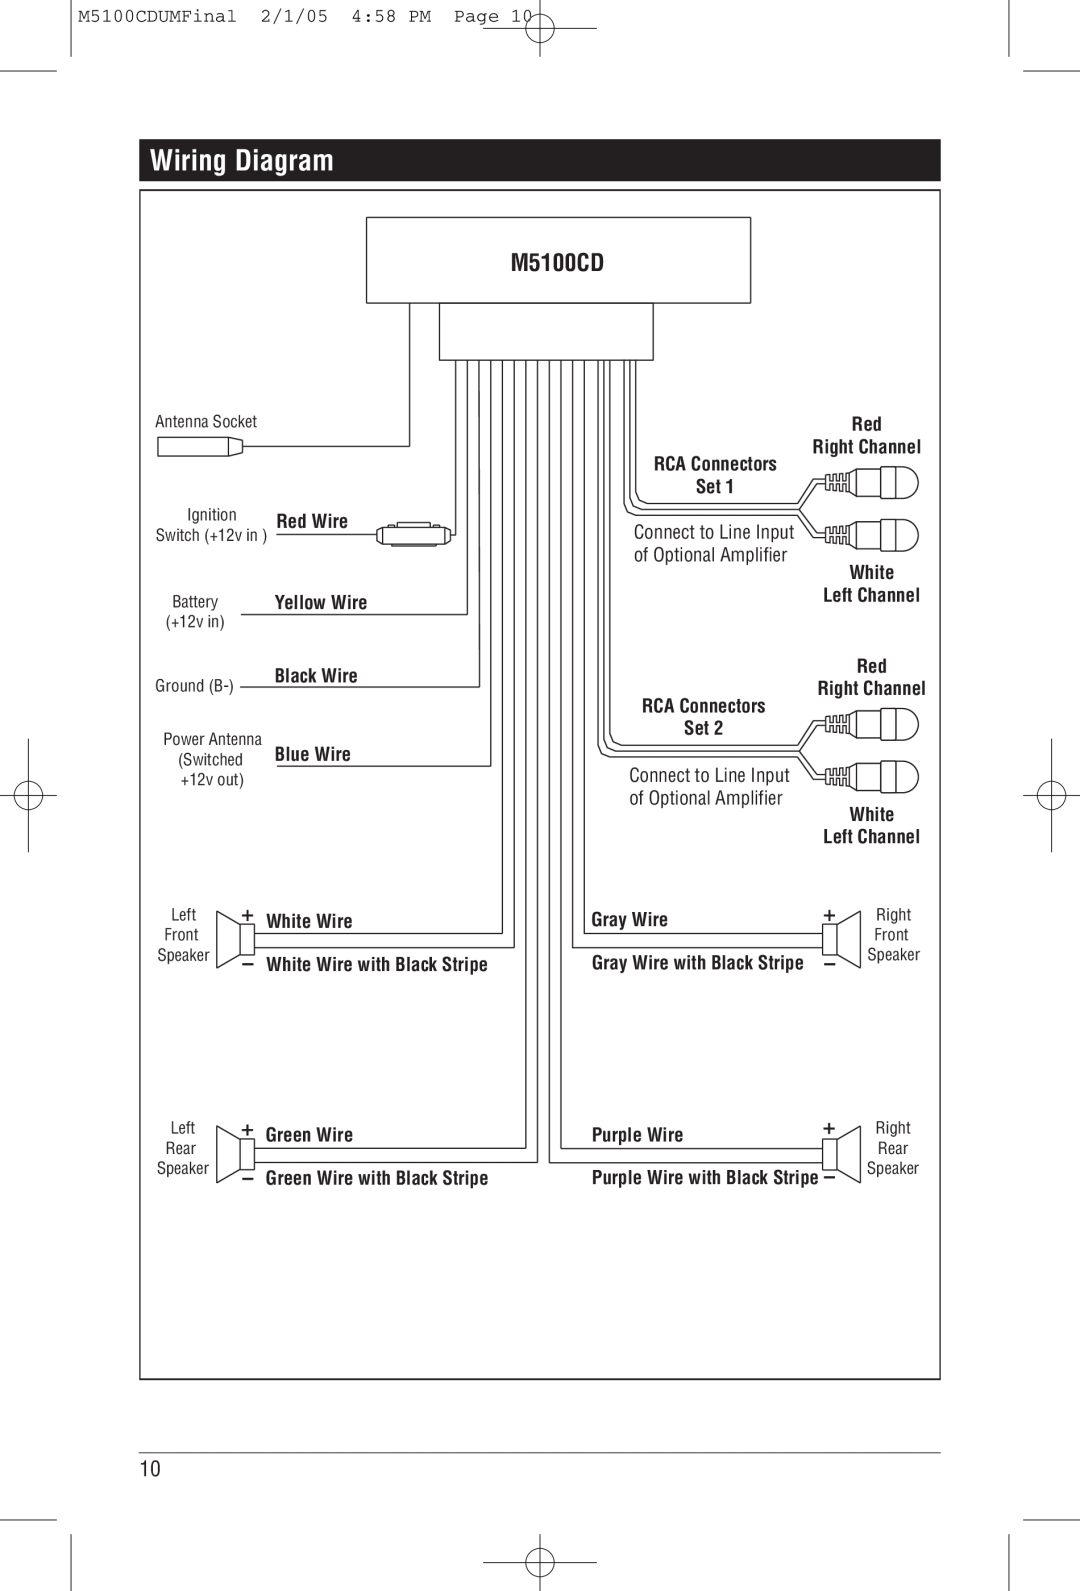 Magnadyne Wiring Diagram, M5100CDUMFinal 2/1/05 4 58 PM Page, Red Wire, Yellow Wire, Black Wire, Blue Wire, White Wire 